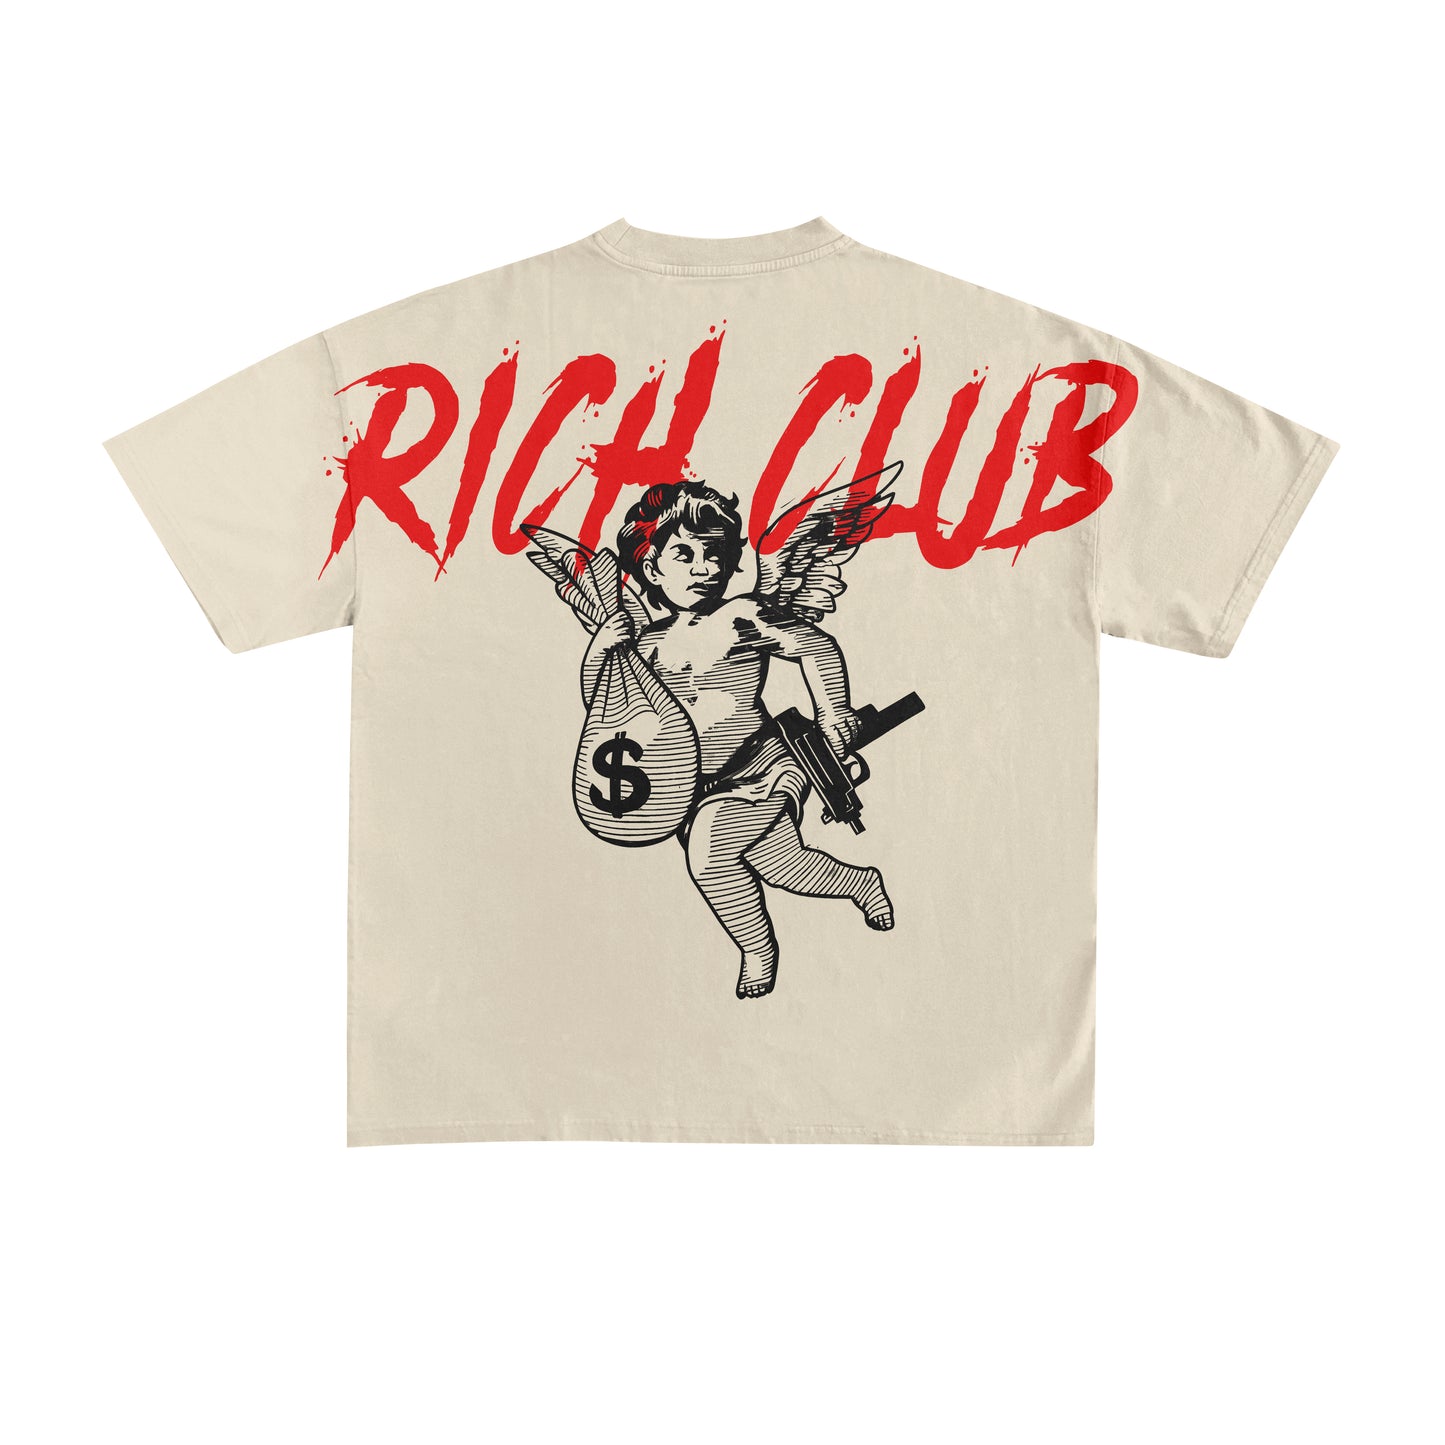 Rich Club T-shirt (Beige)